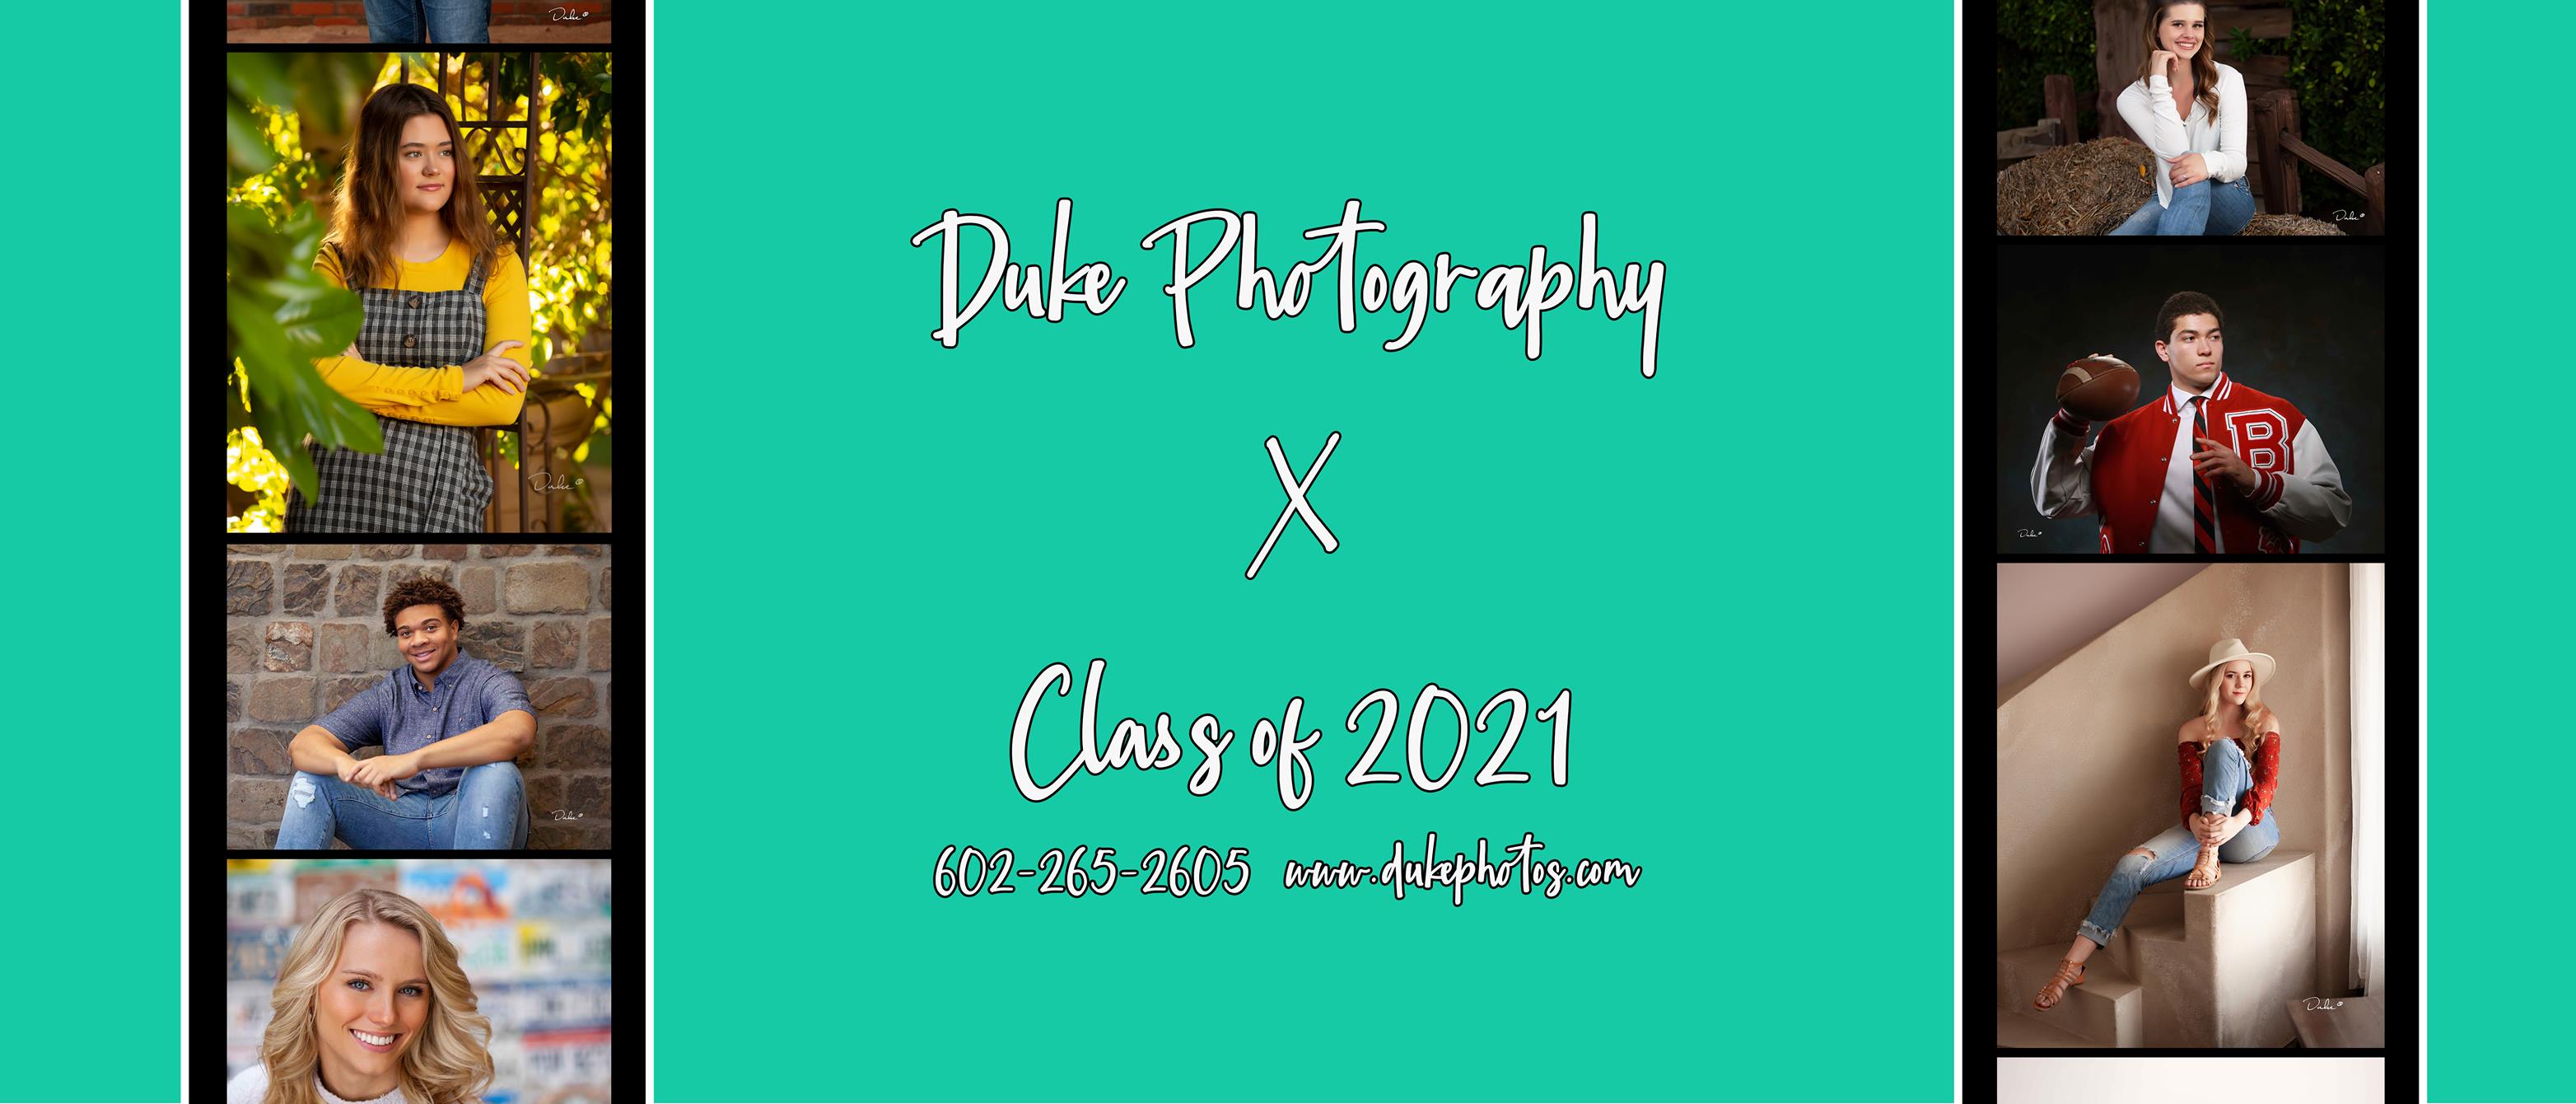 Duke Photography, Inc.